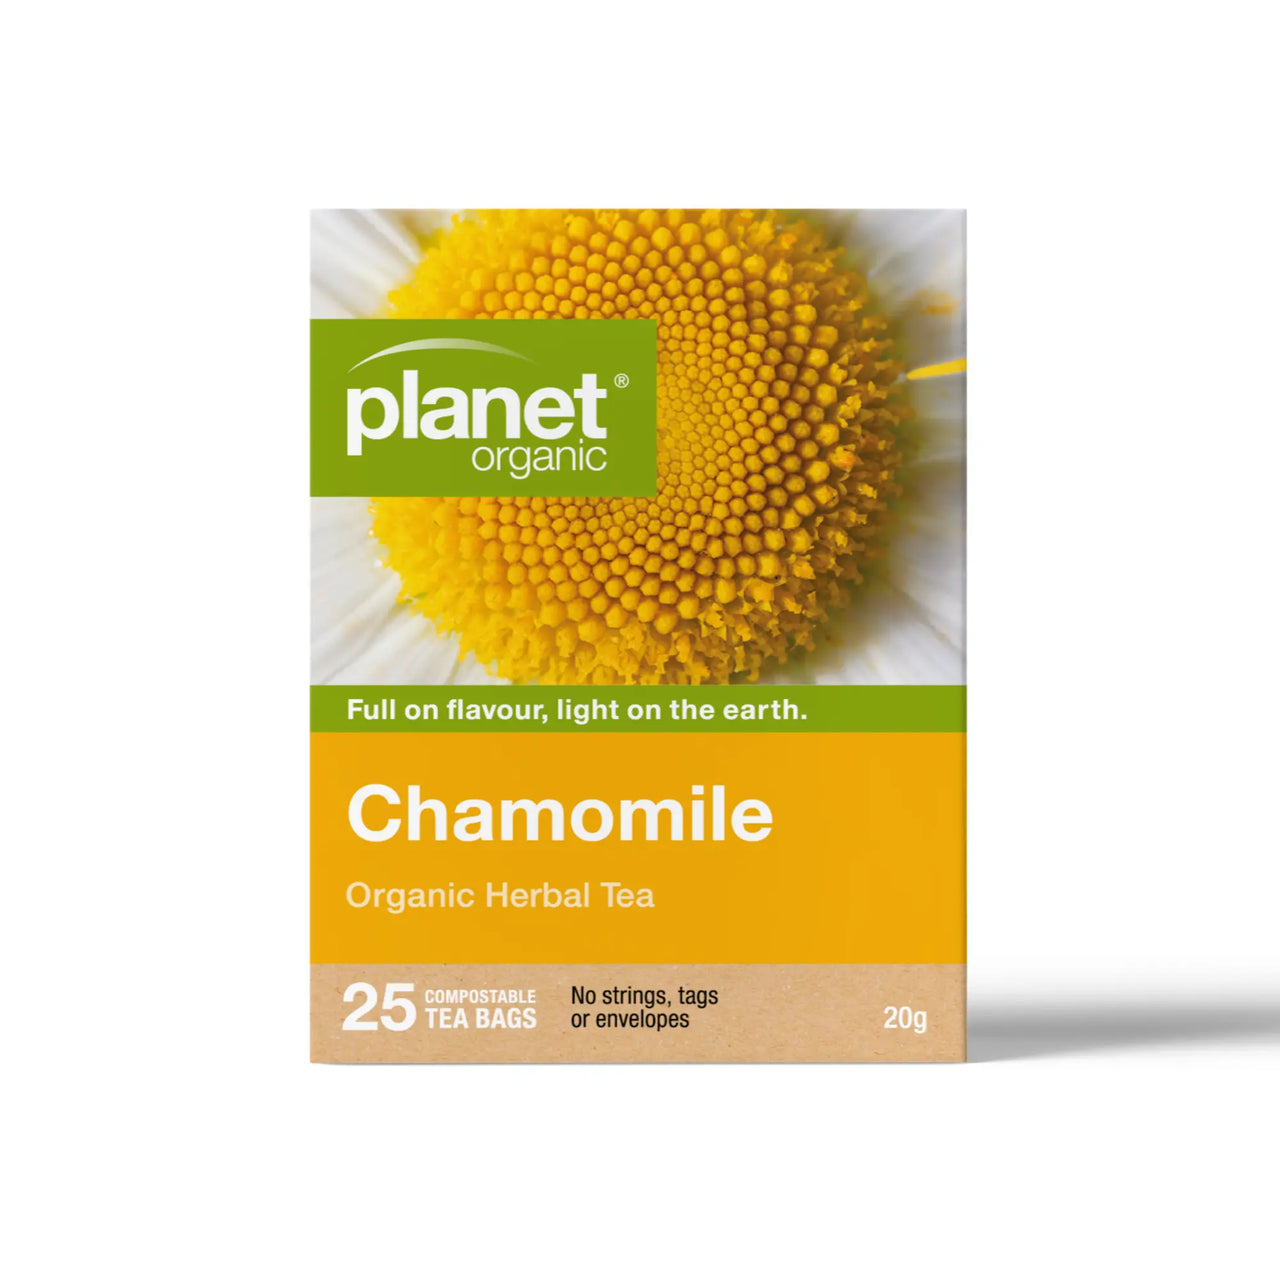 Chamomile Flower Tea Benefits